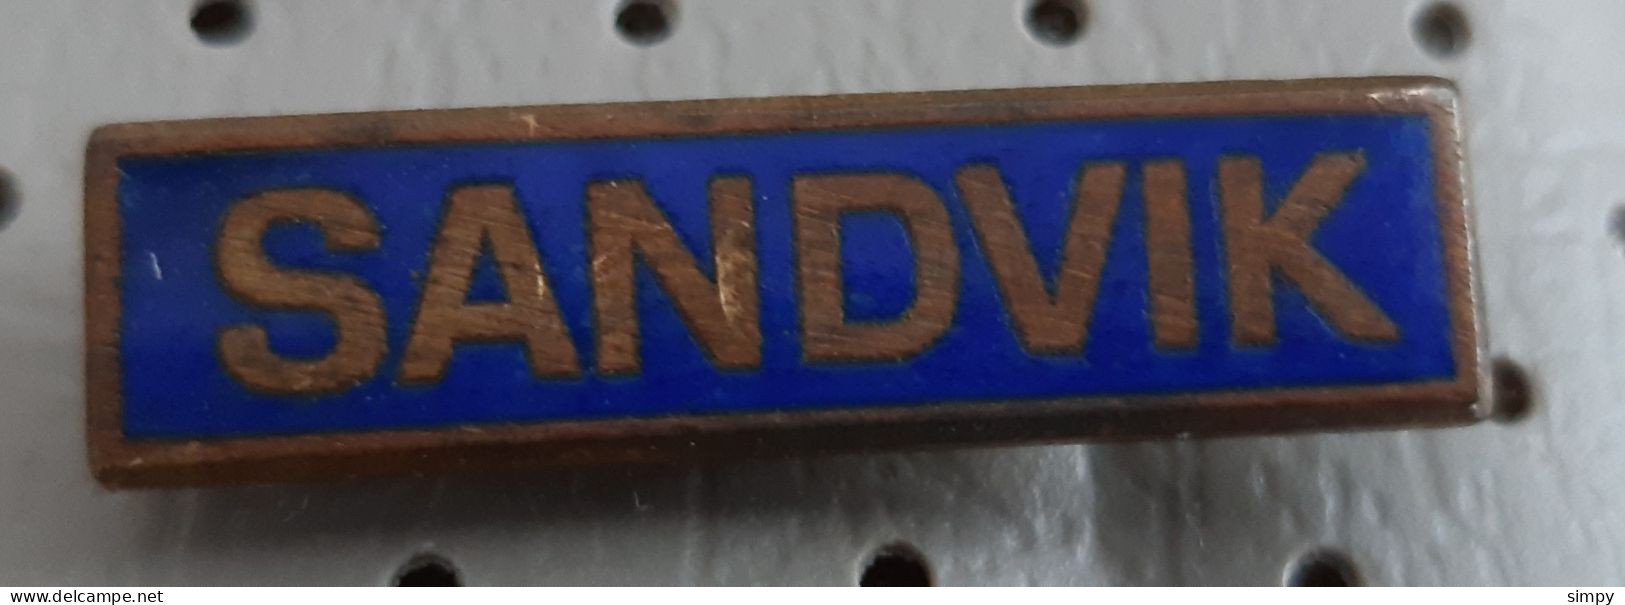 SANDVIK Machinery Tractors, Tool's Vintage Pin - Trademarks